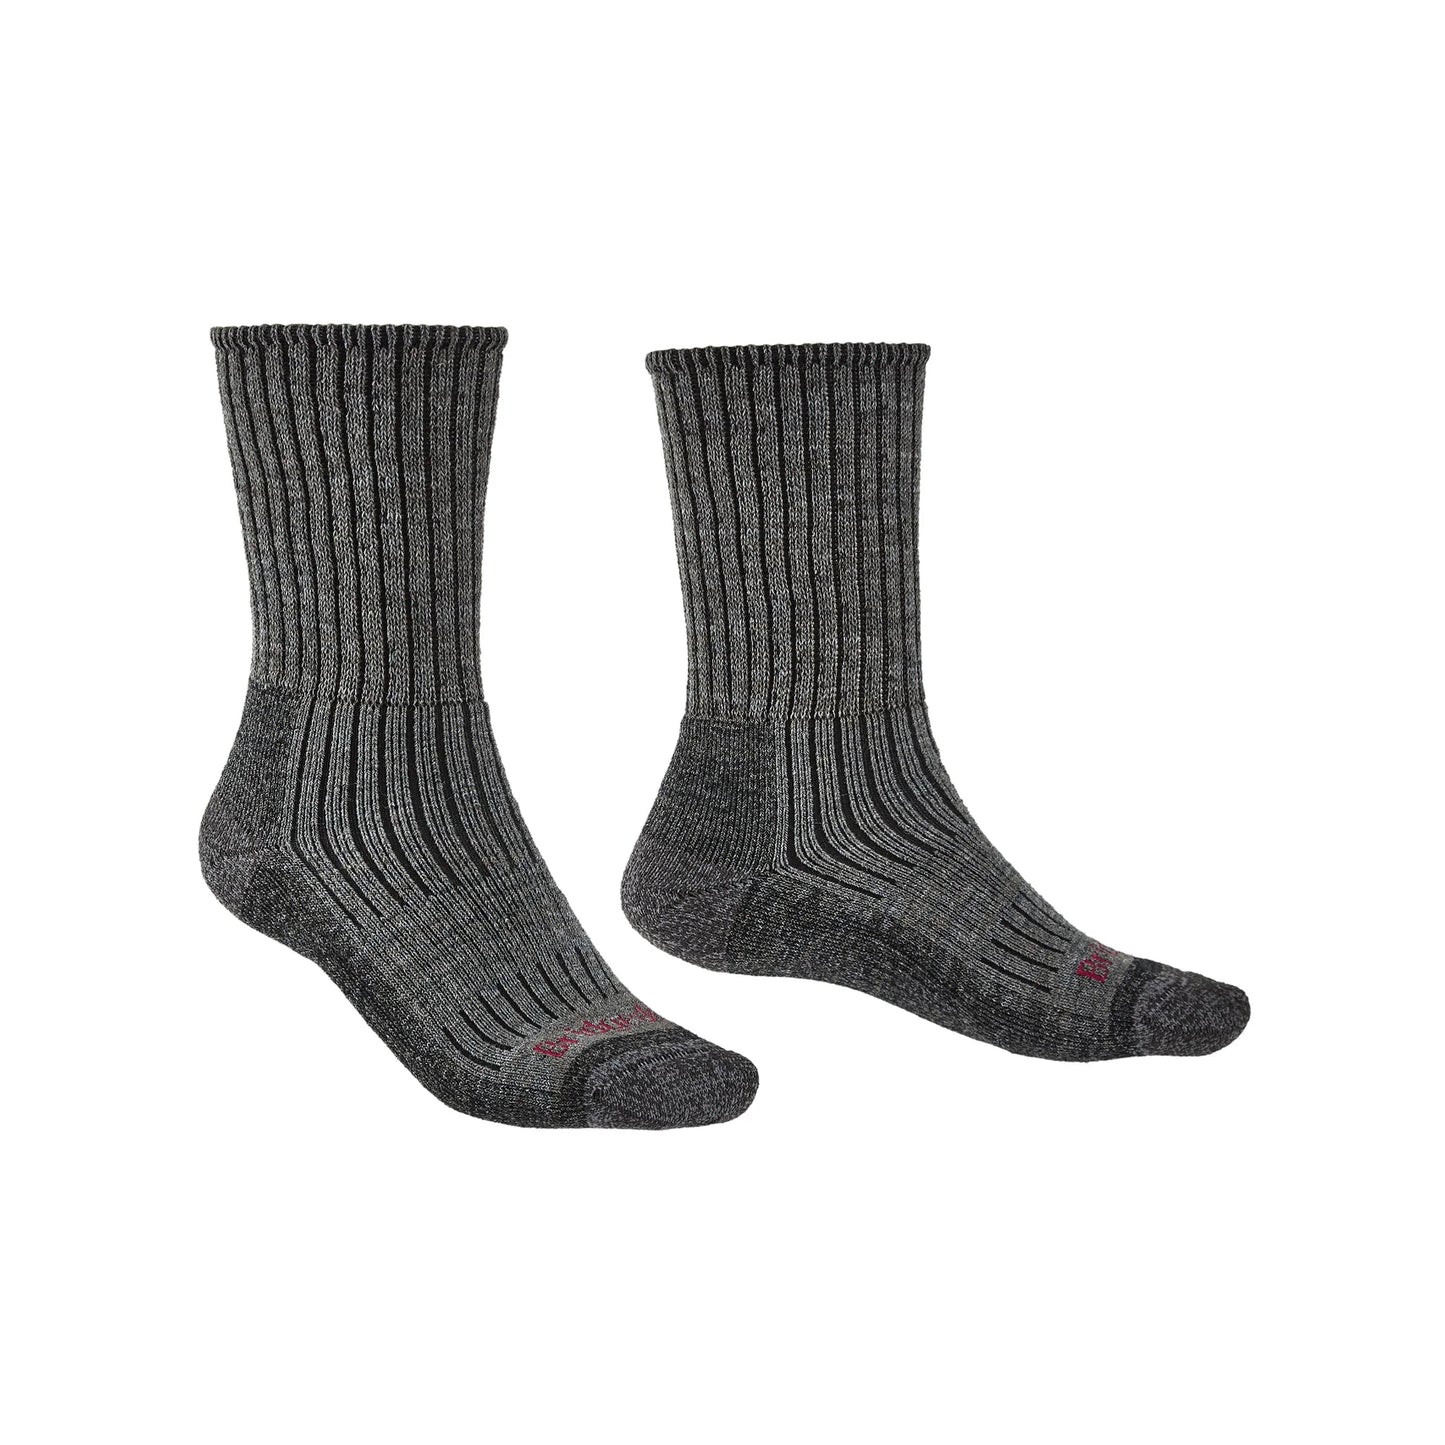 Bridgedale Mens Hike Midweight Merino Comfort Boot Socks